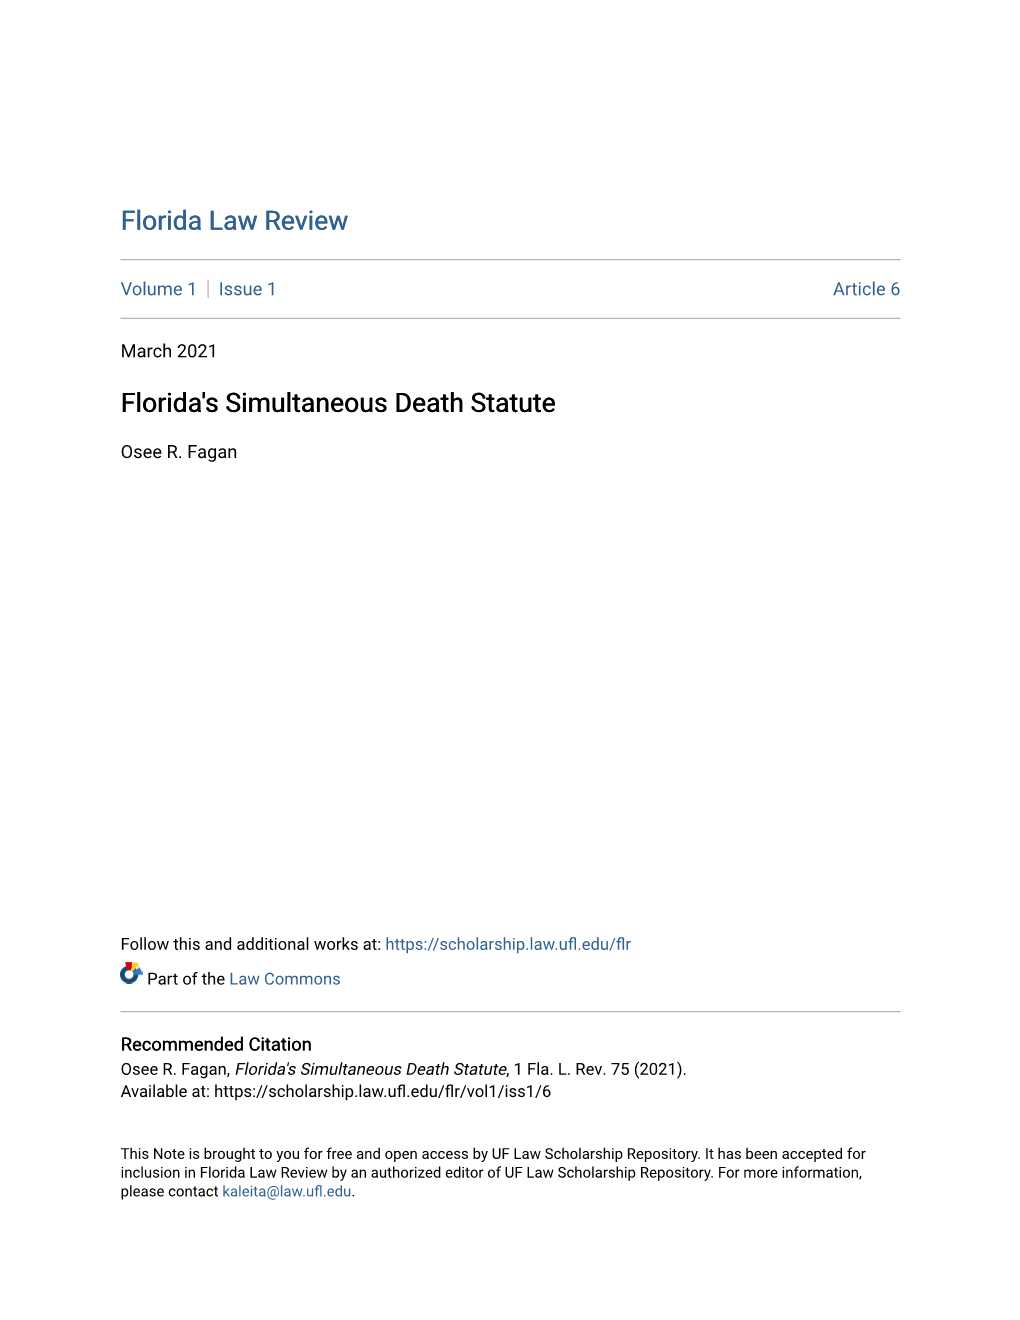 Florida's Simultaneous Death Statute